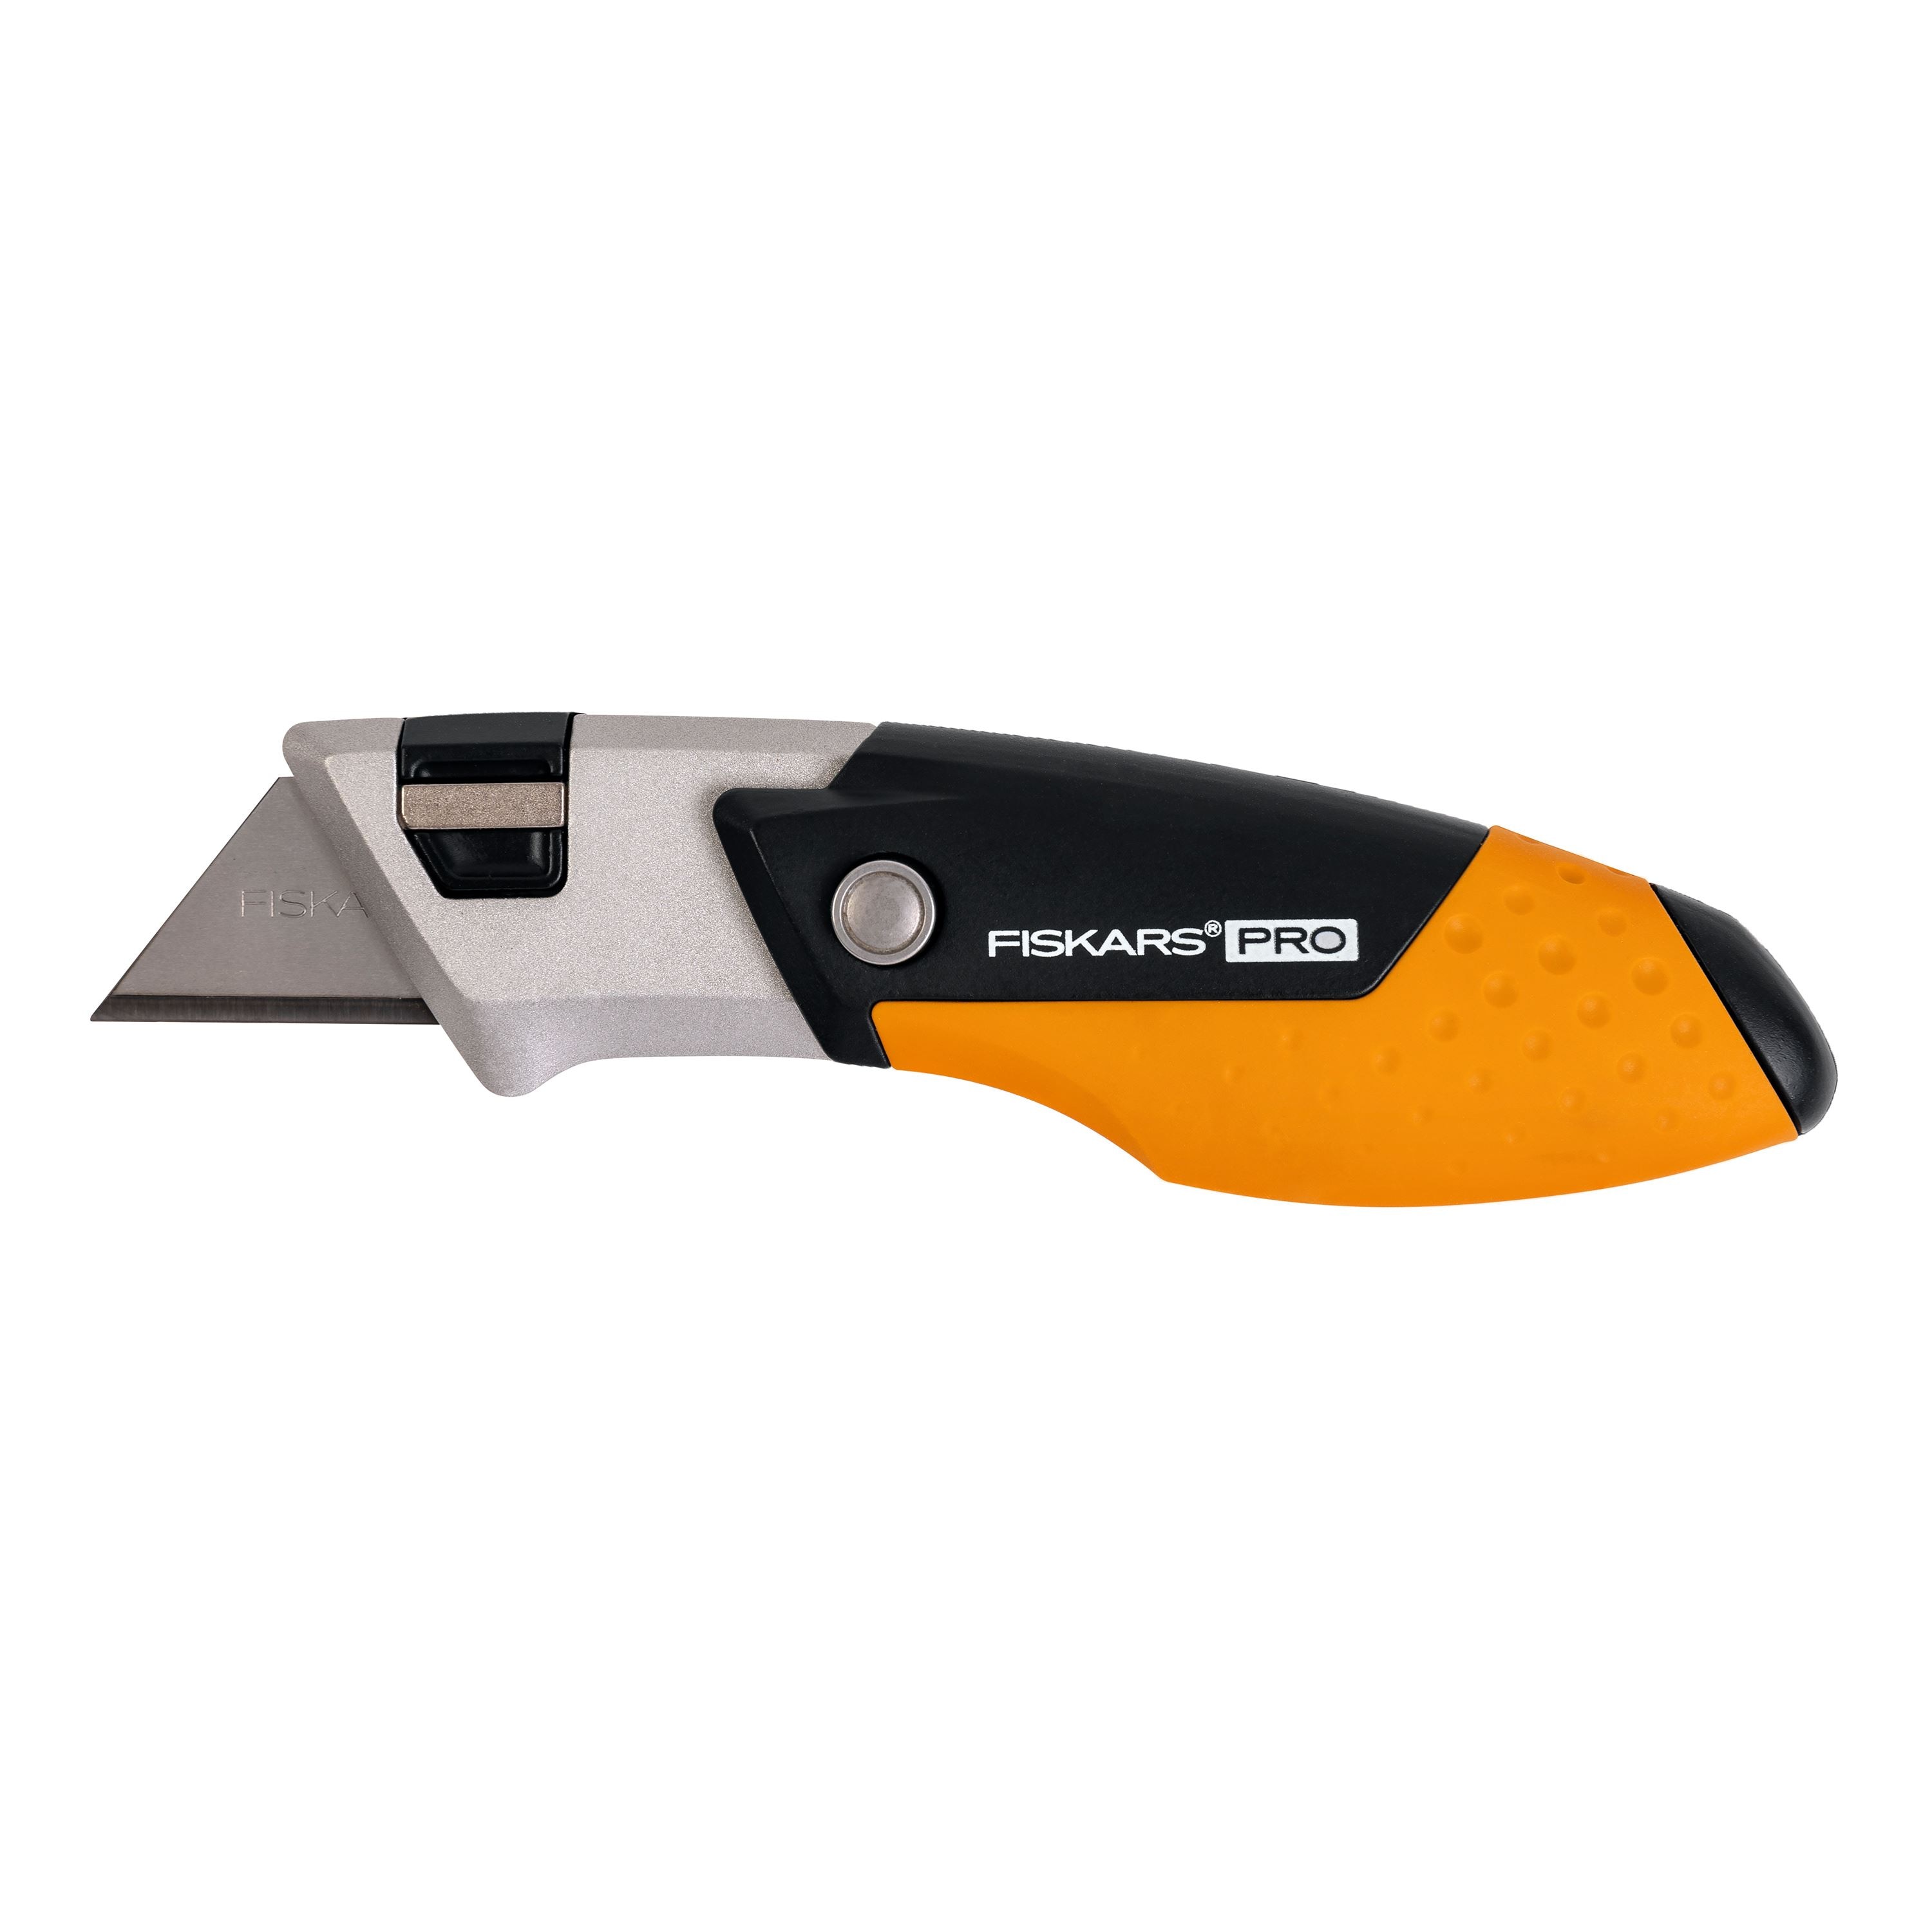 Fiskars® Pro Compact Folding Utility Knife